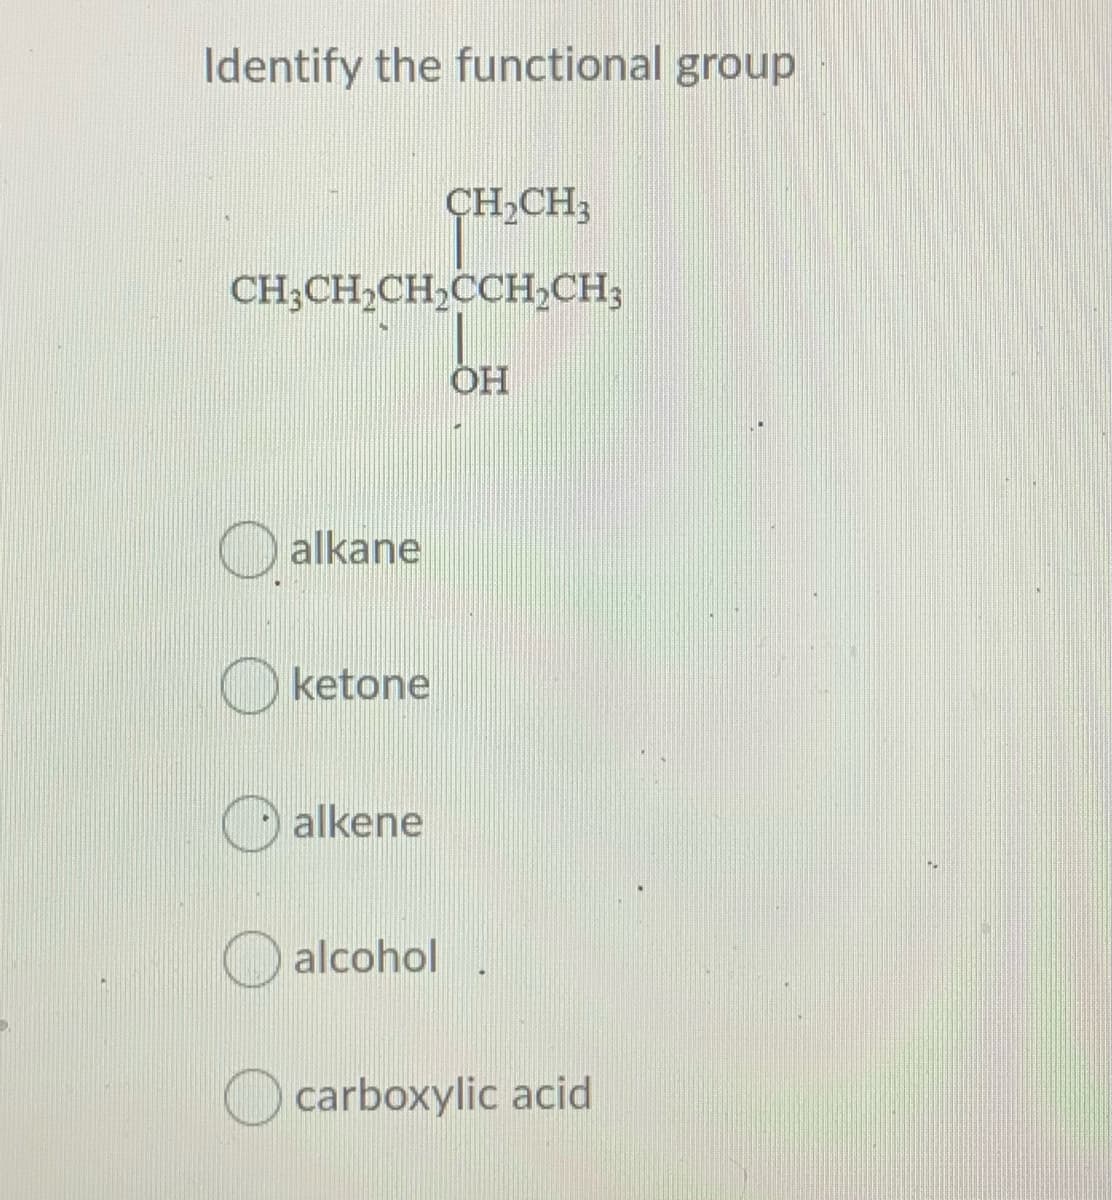 Identify the functional group
CH,CH3
CH;CH,CH,CCH,CH;
ОН
O alkane
ketone
alkene
alcohol
carboxylic acid
